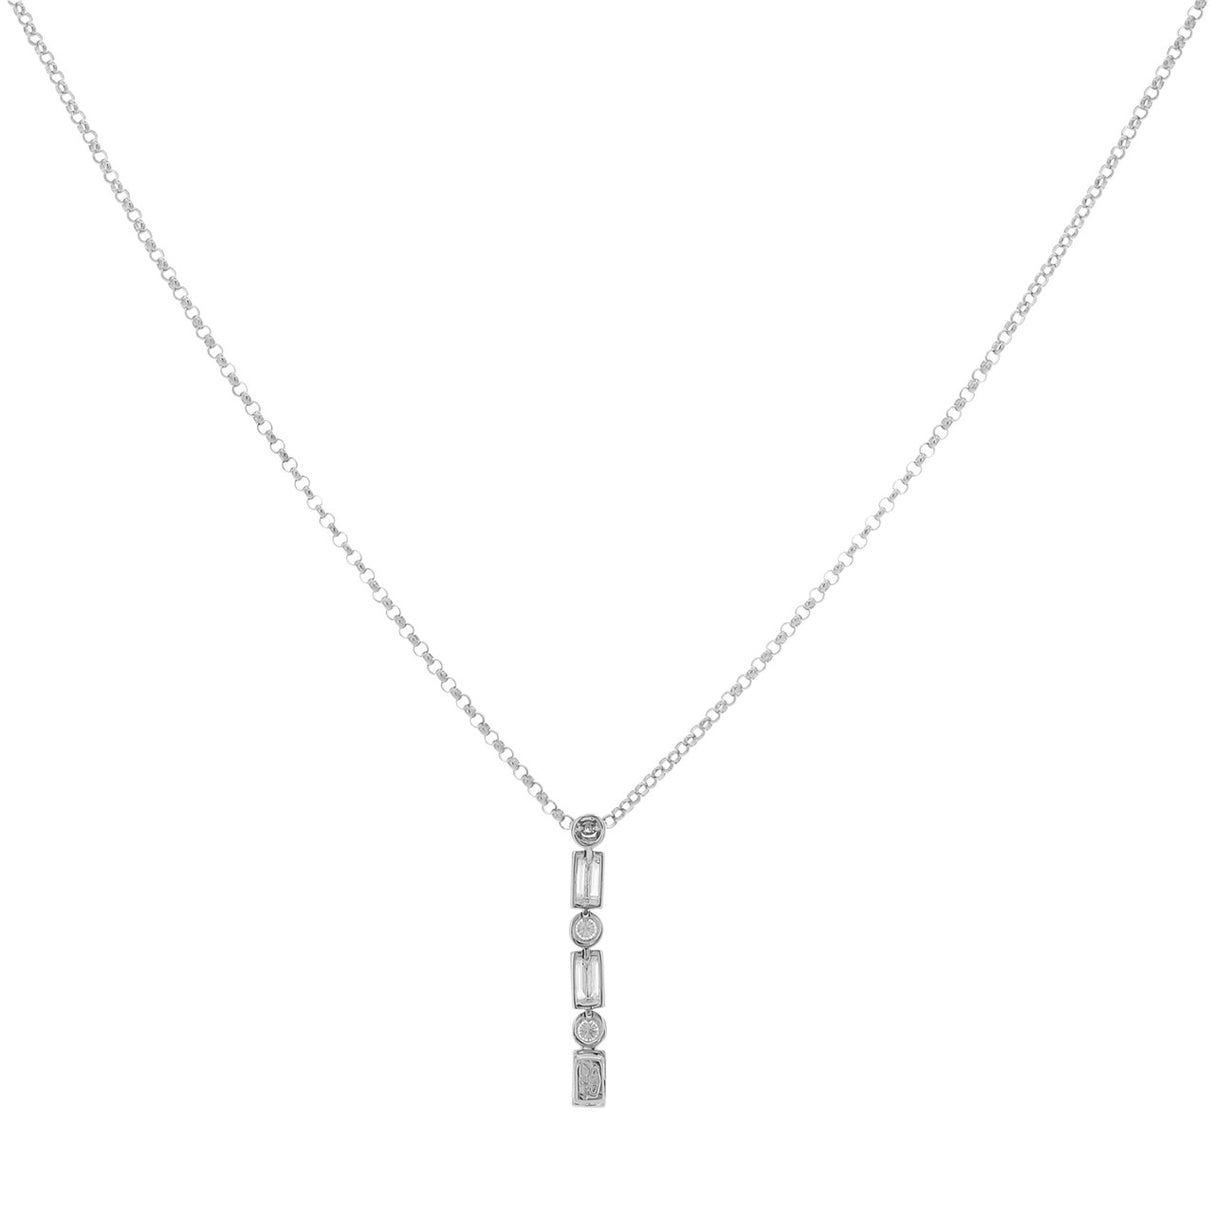 18K White Gold 0.57 Carat Diamond Pendant Necklace